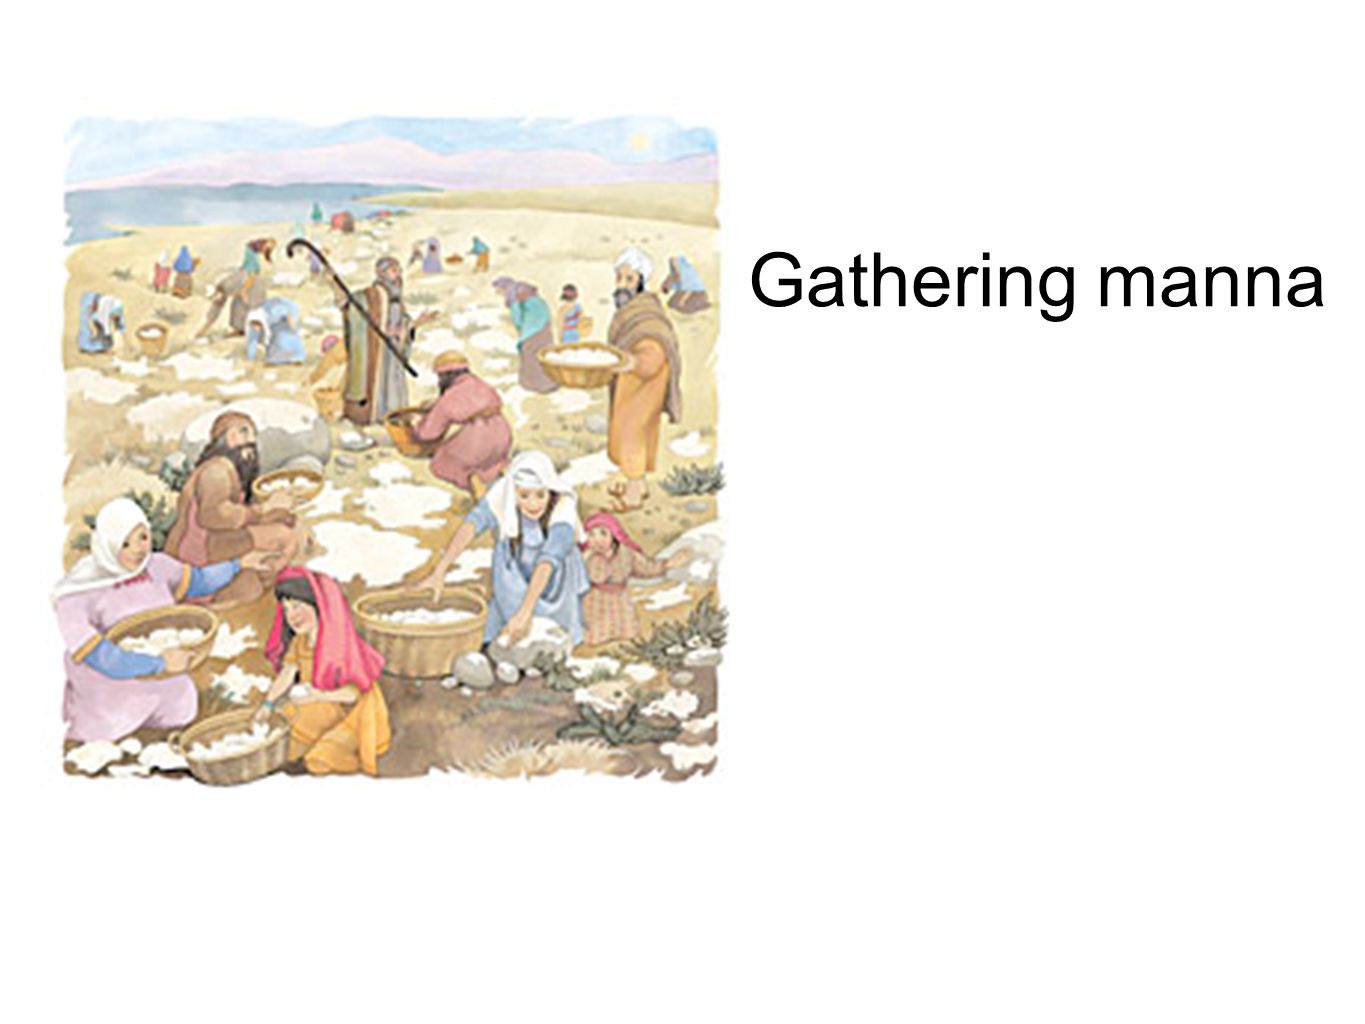 Gathering manna